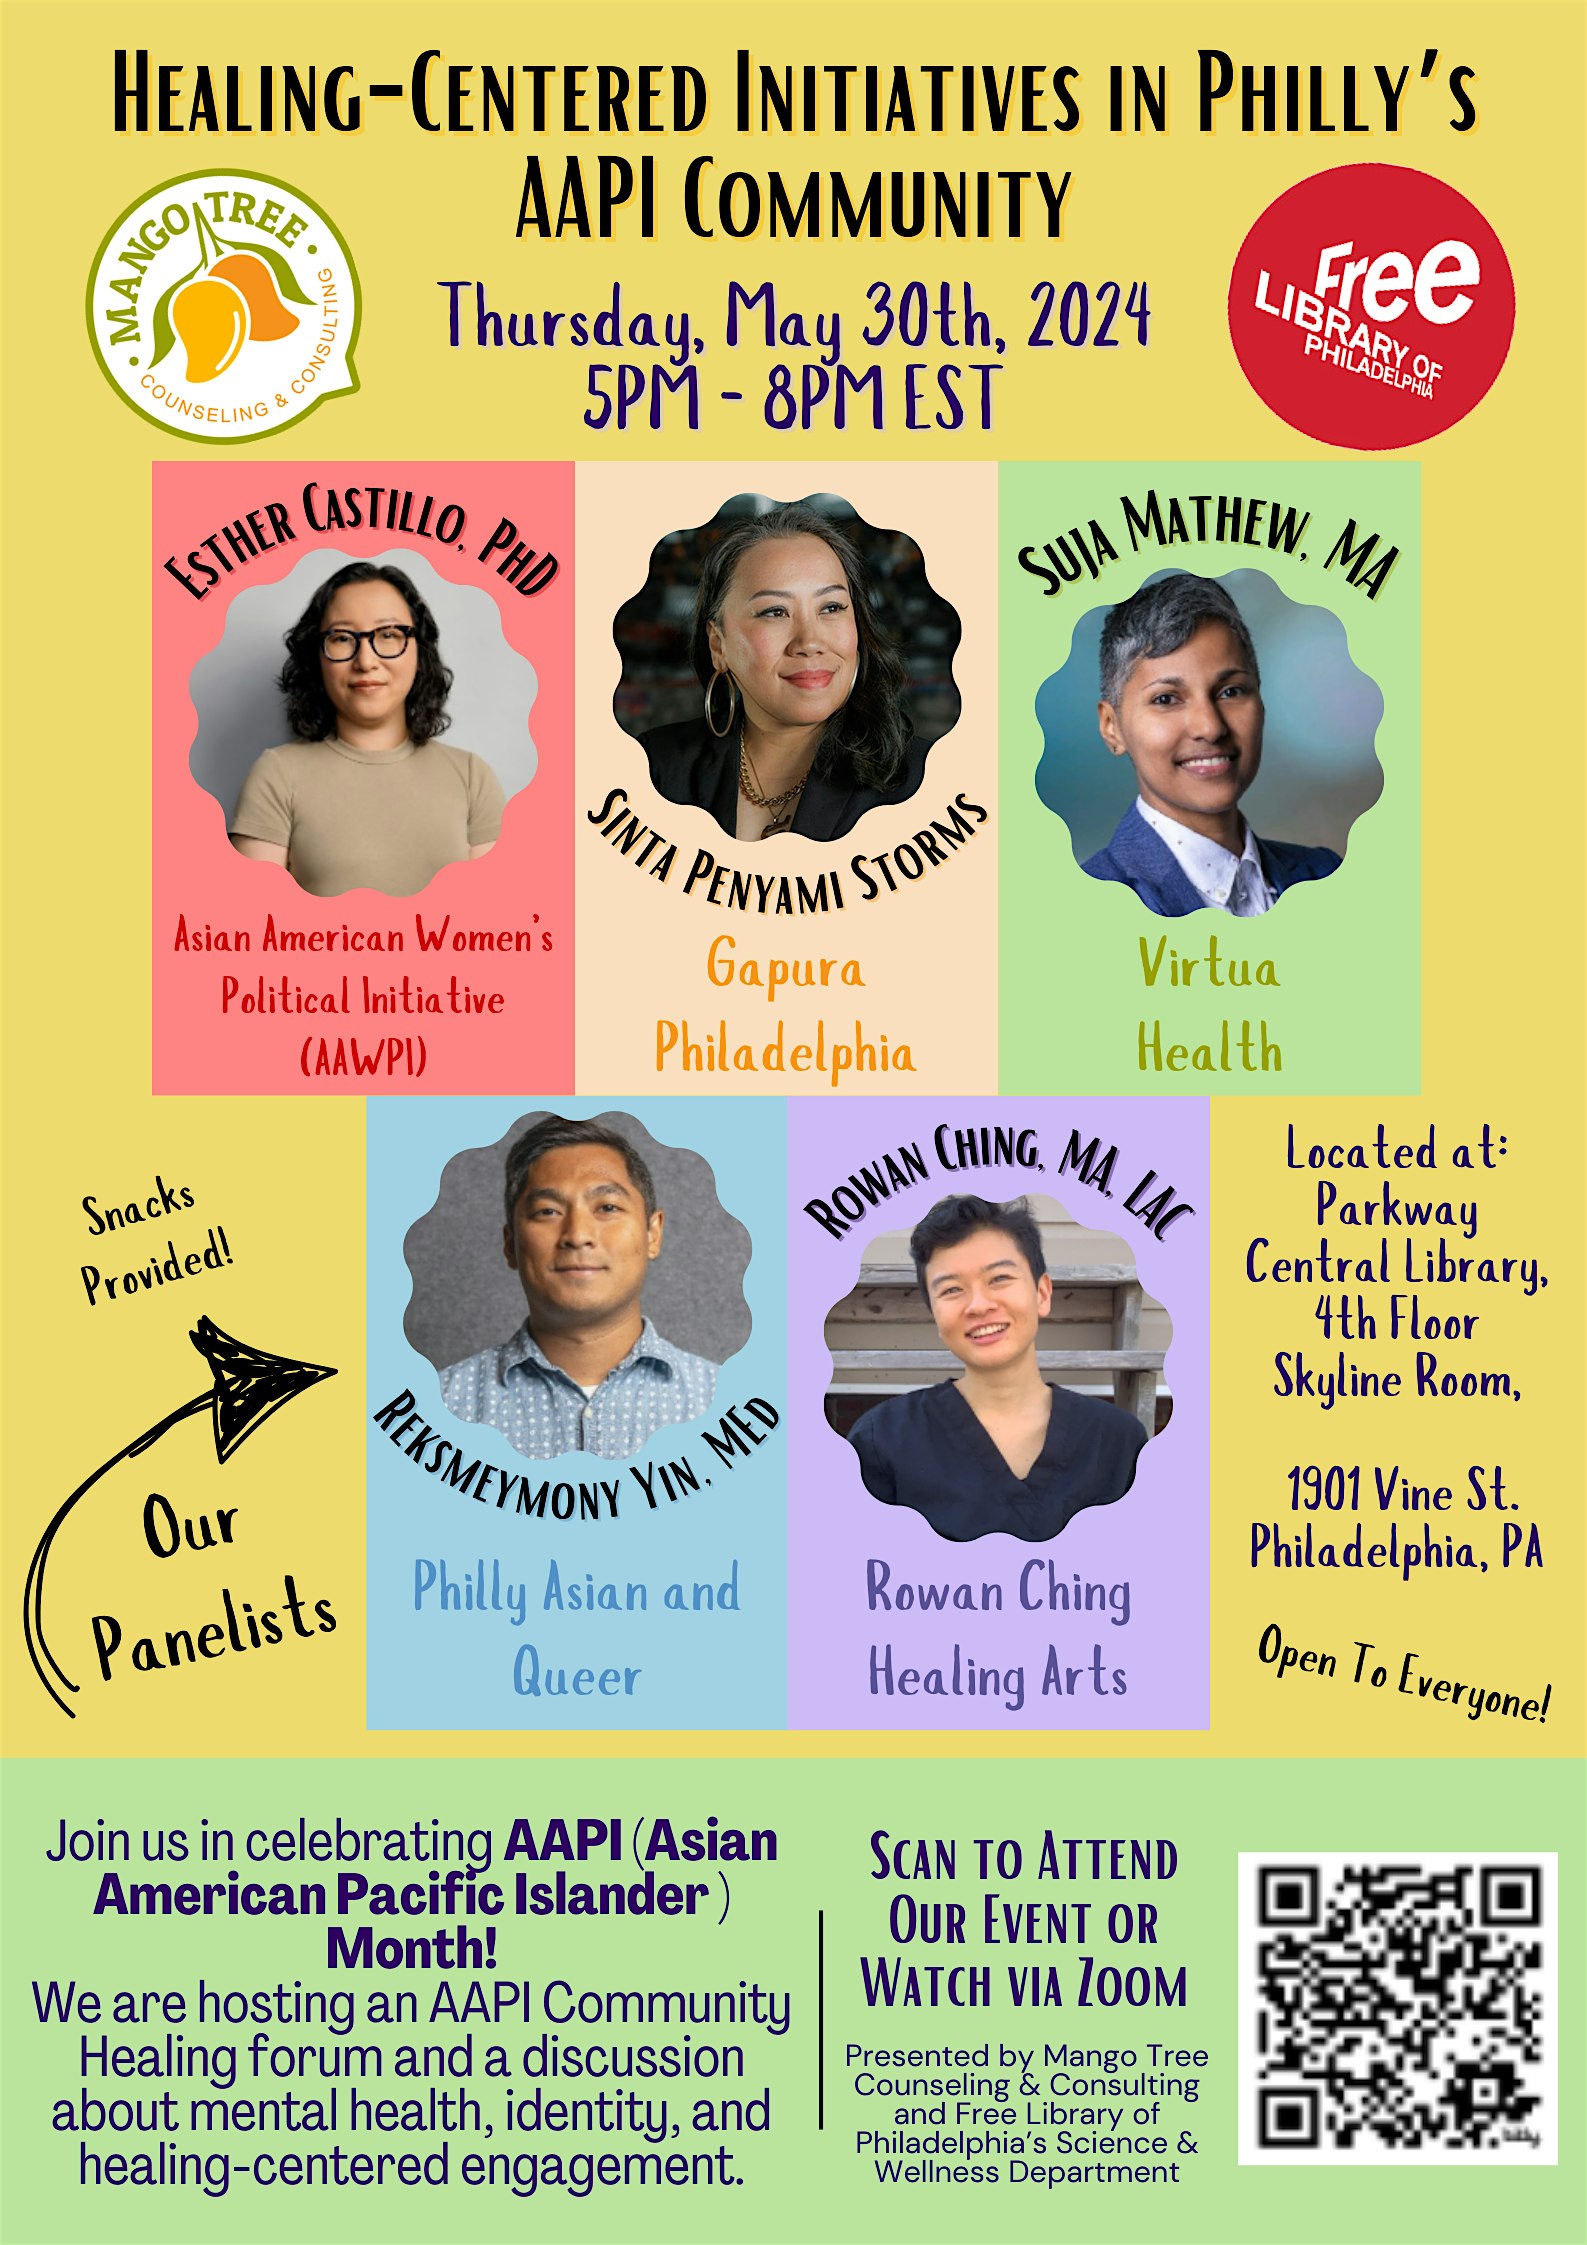 Asian American Healing Centered Initiatives Panel in Philadelphia